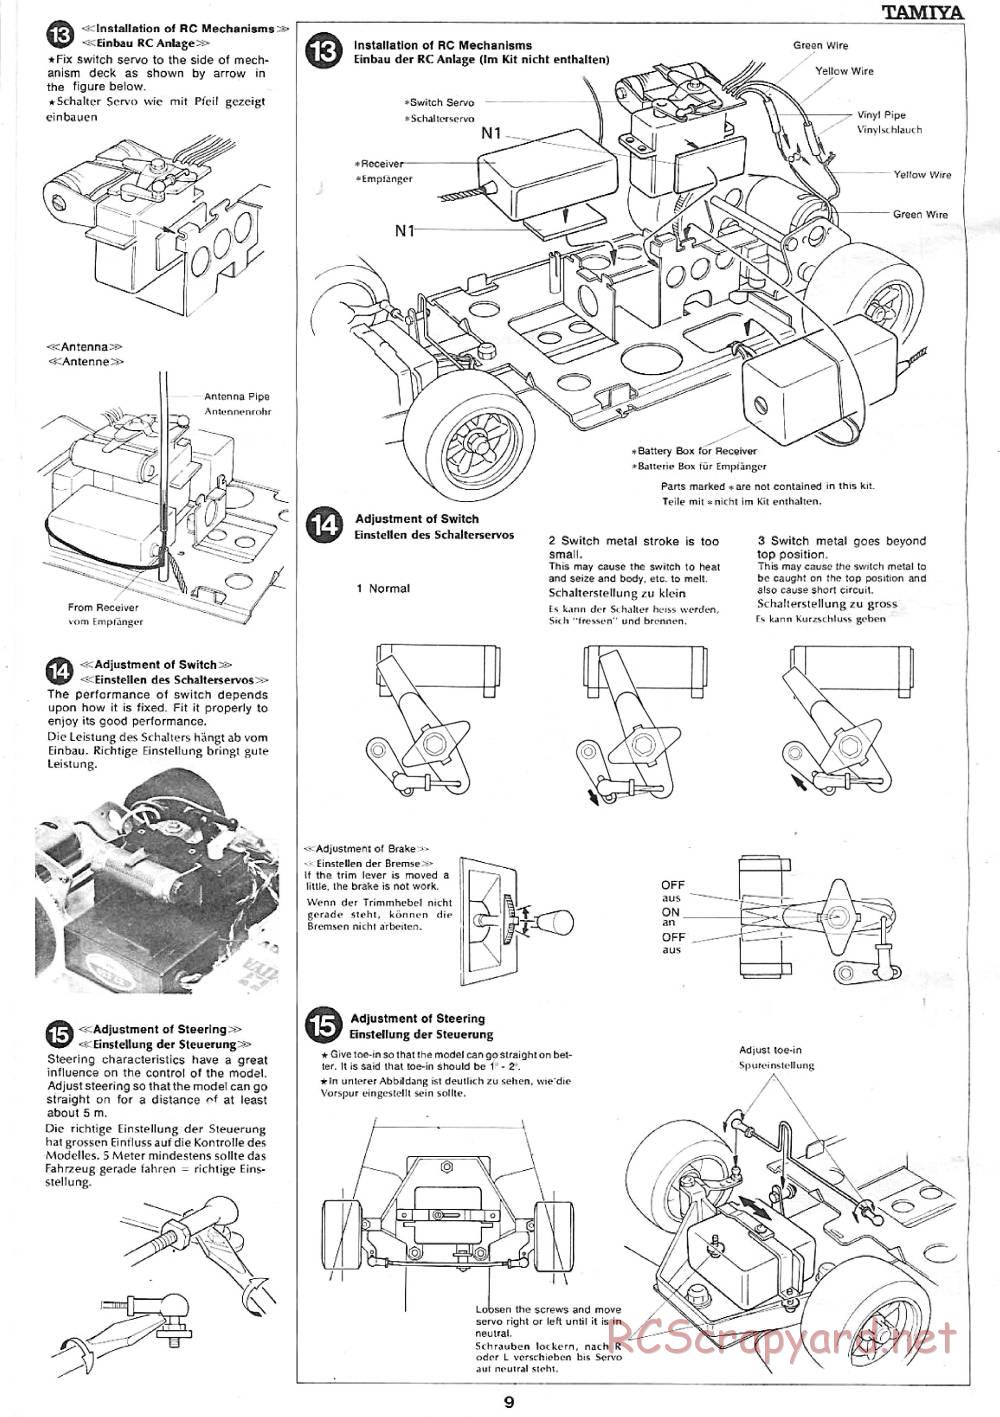 Tamiya - Martini Porsche 936 Turbo - 58006 - Manual - Page 9